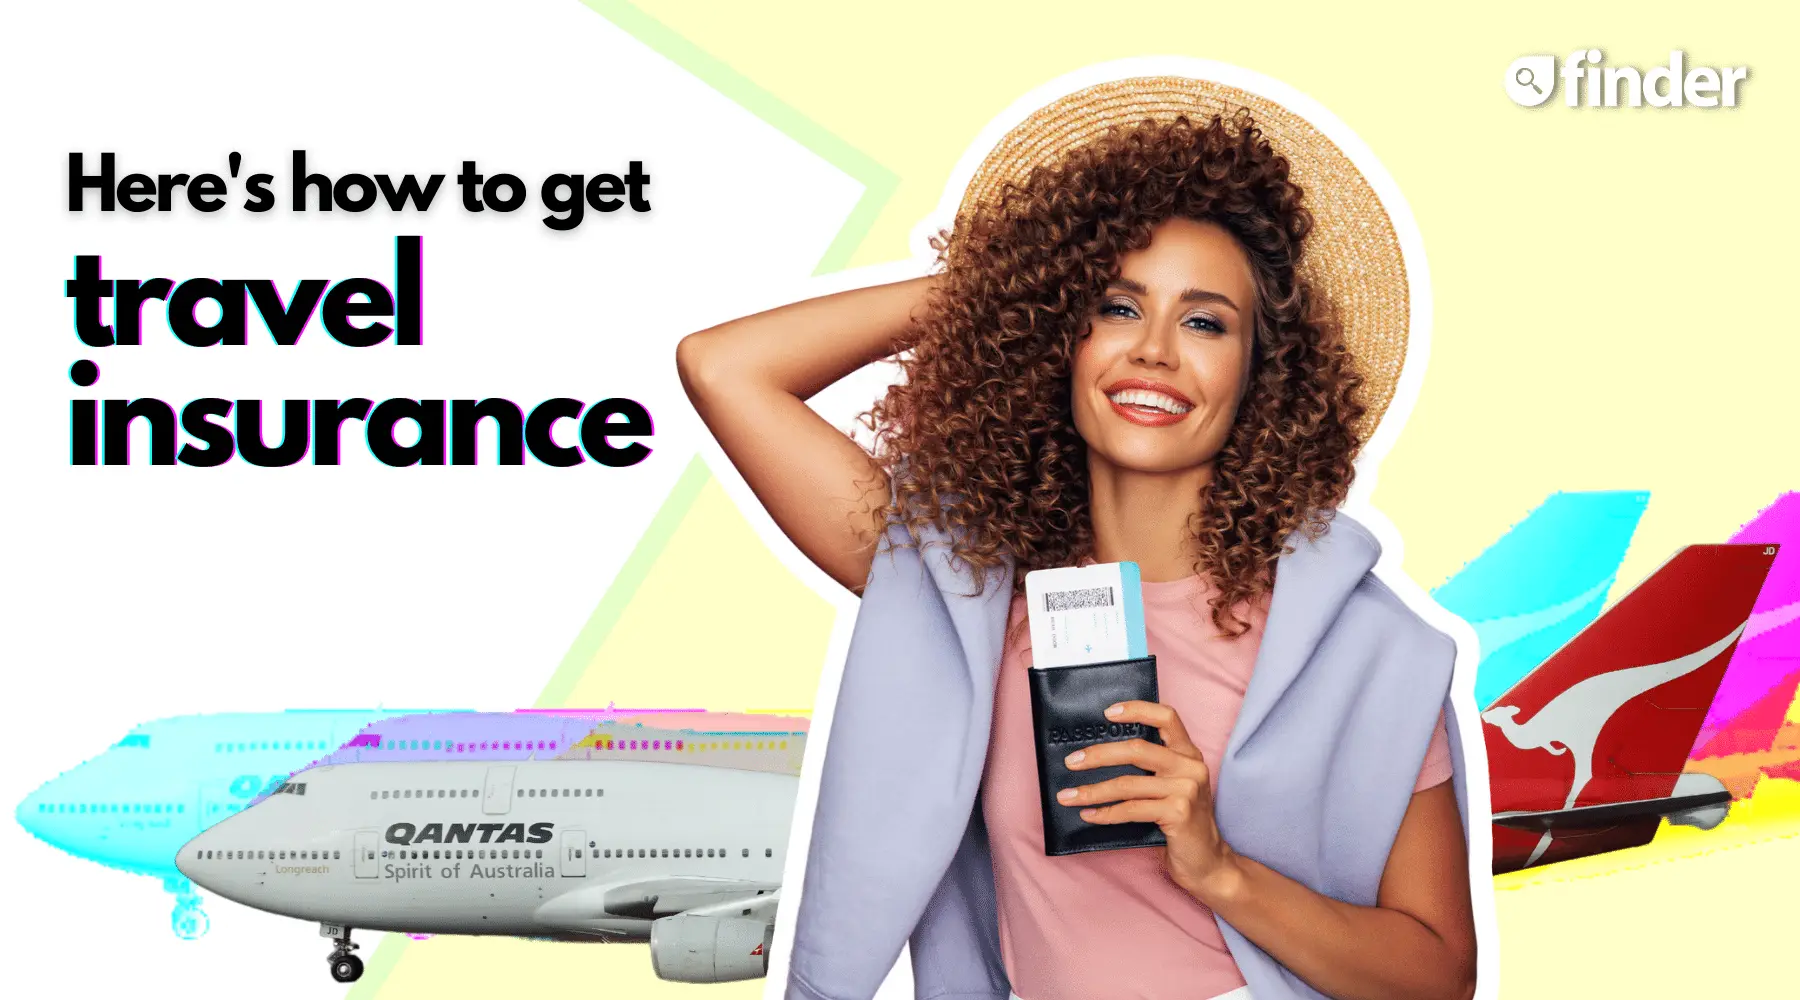 qantas travel insurance how to claim